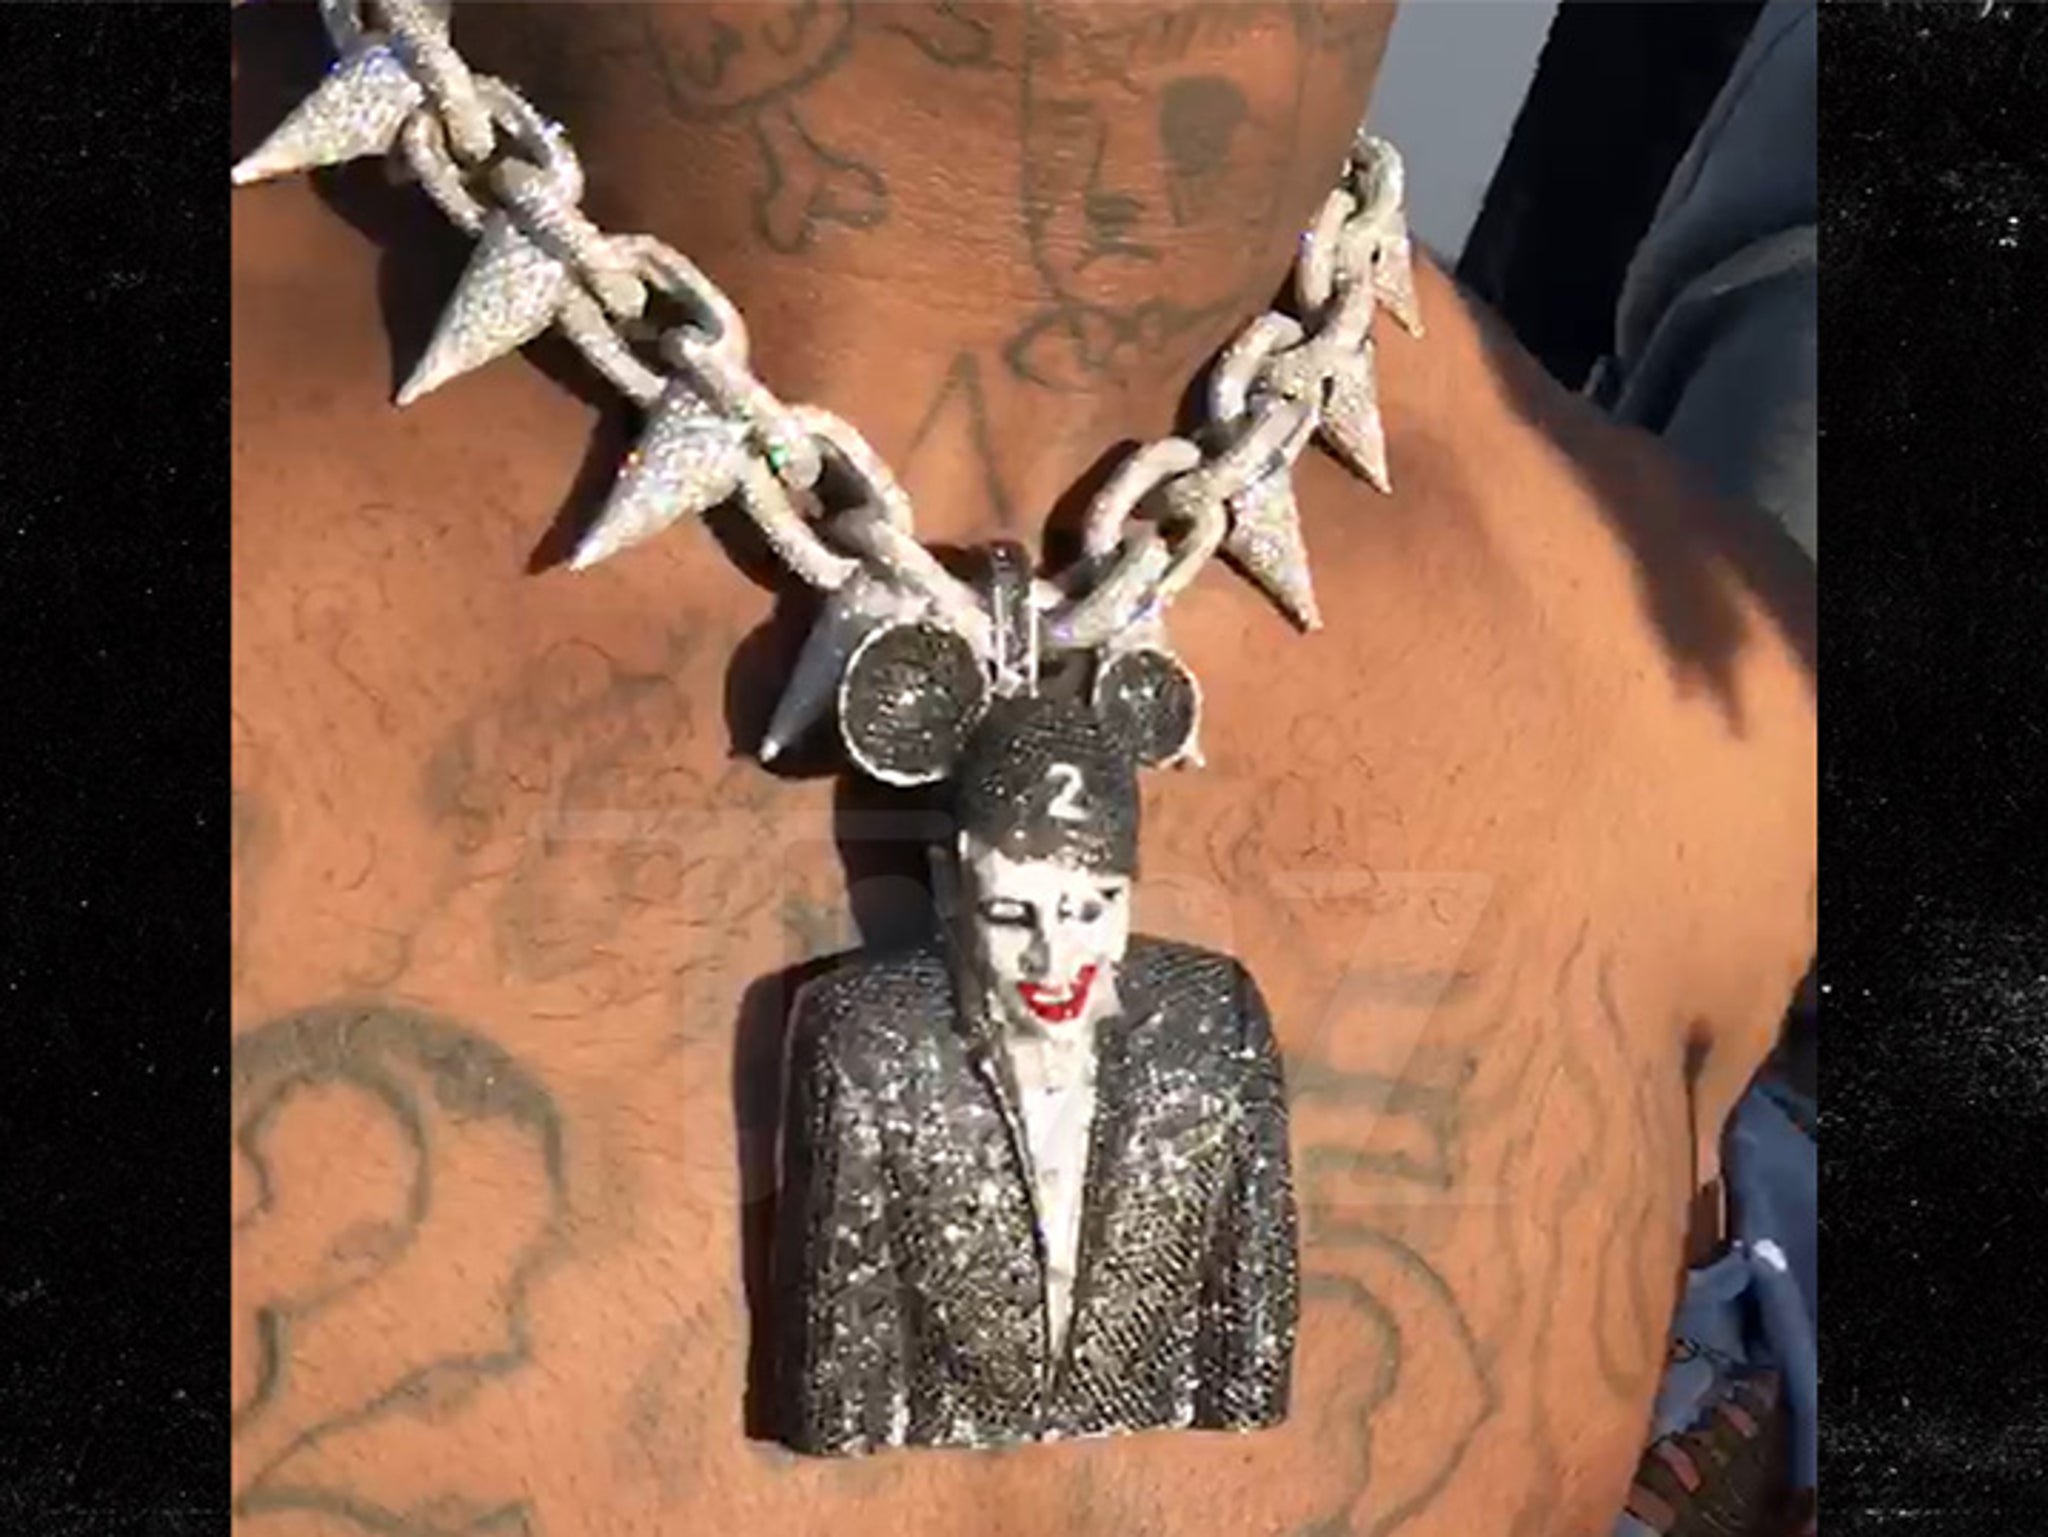 Lil Uzi Vert Drops $220k for a Marilyn Manson Chain